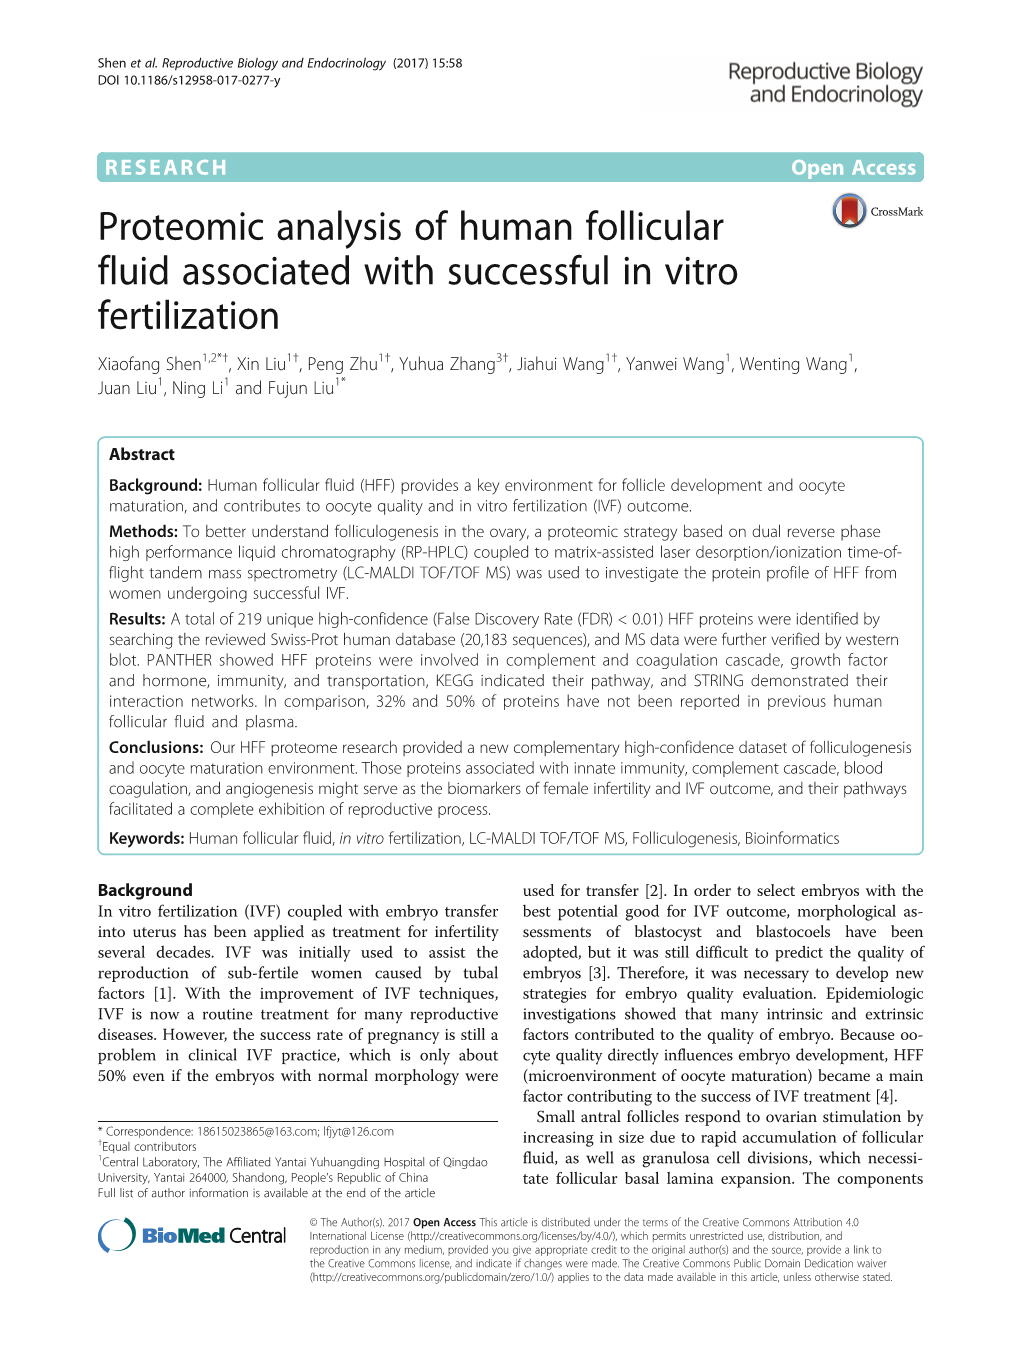 Proteomic Analysis of Human Follicular Fluid Associated with Successful In